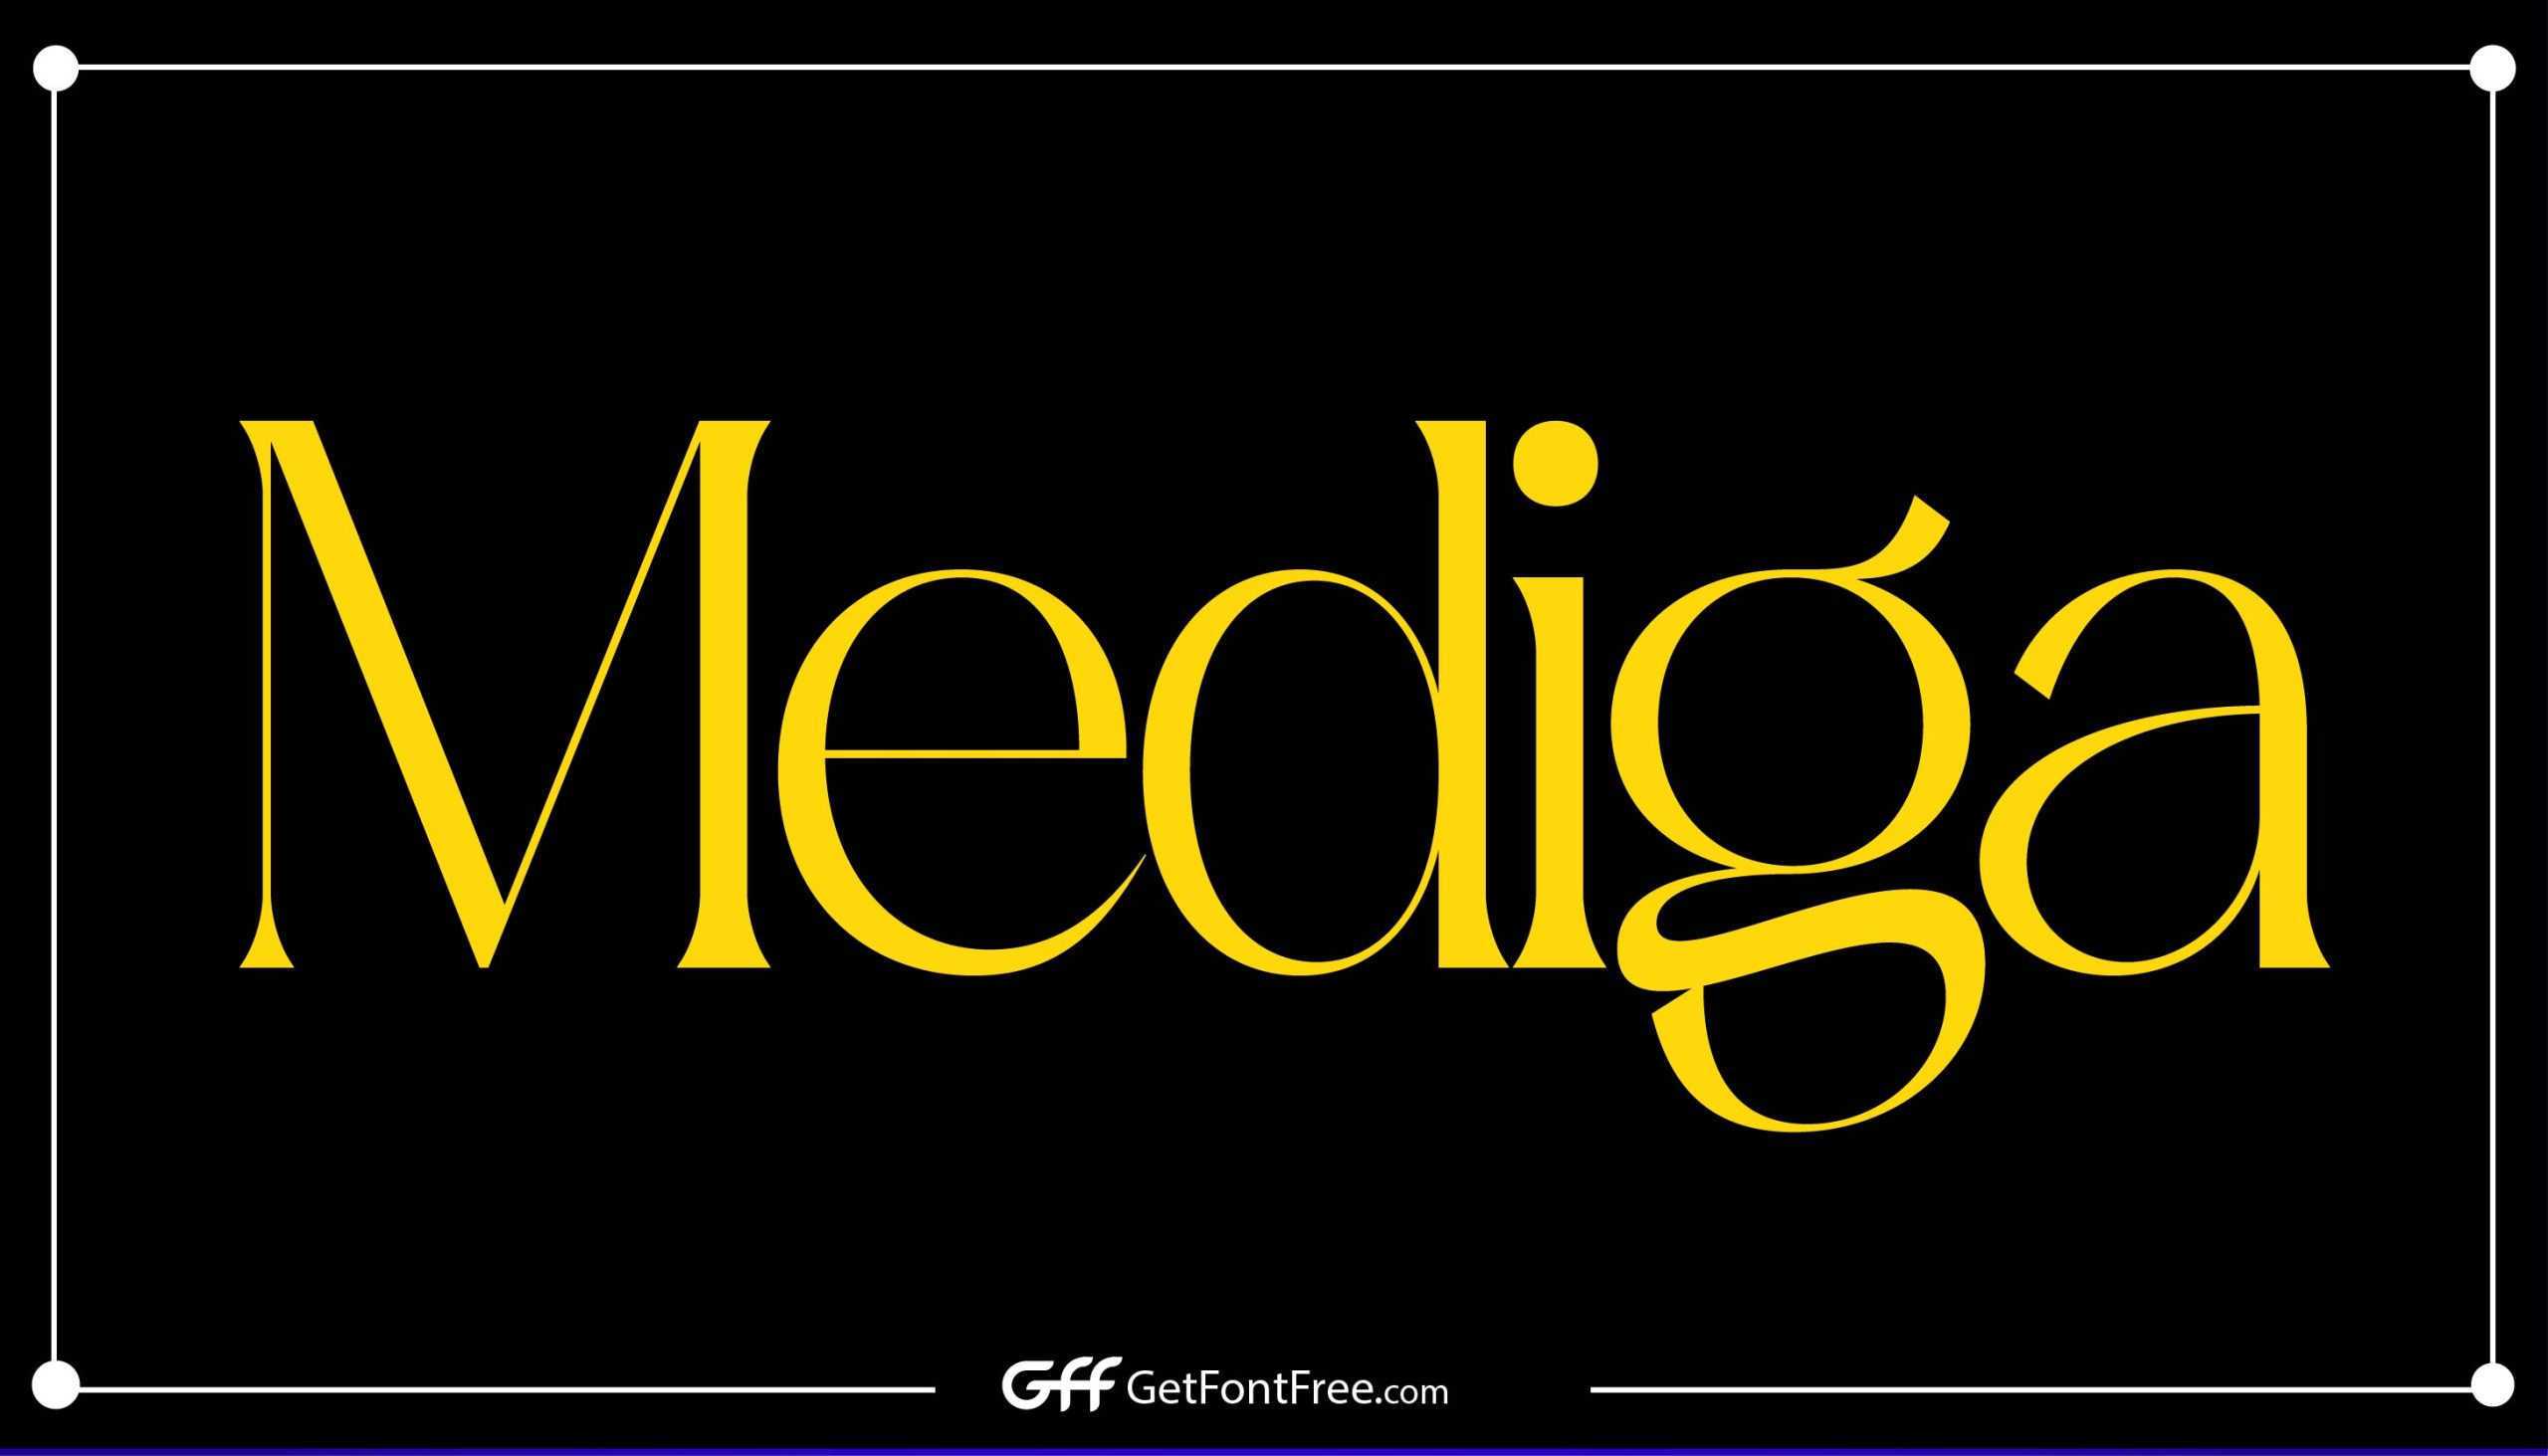 Mediga font Free Download